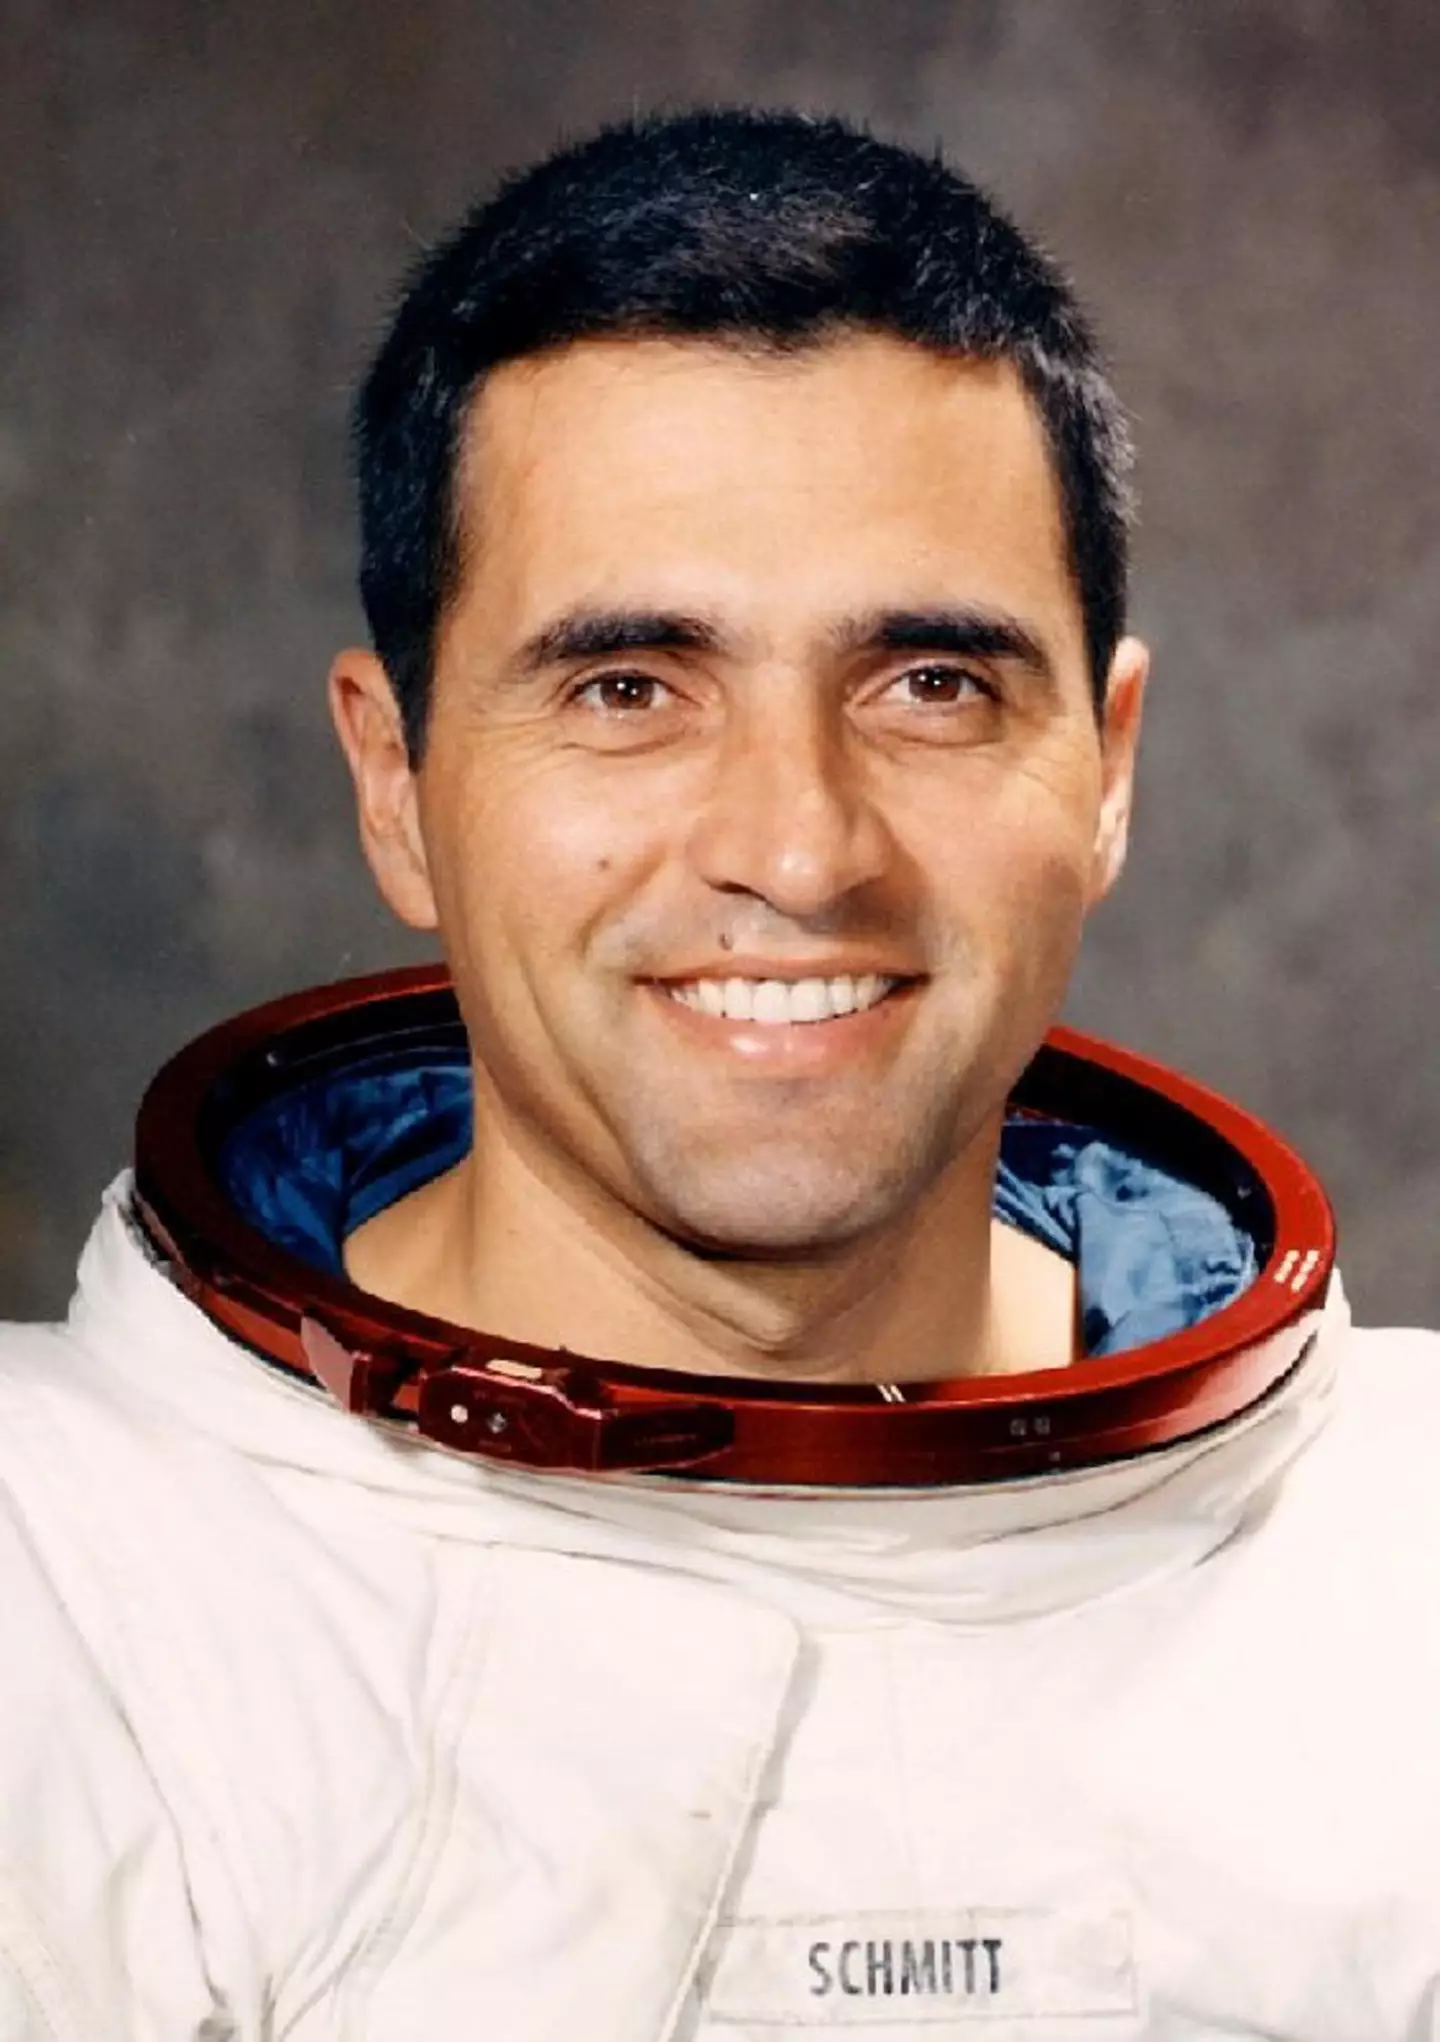 Harrison H. Schmitt walked on the moon in December 1972.